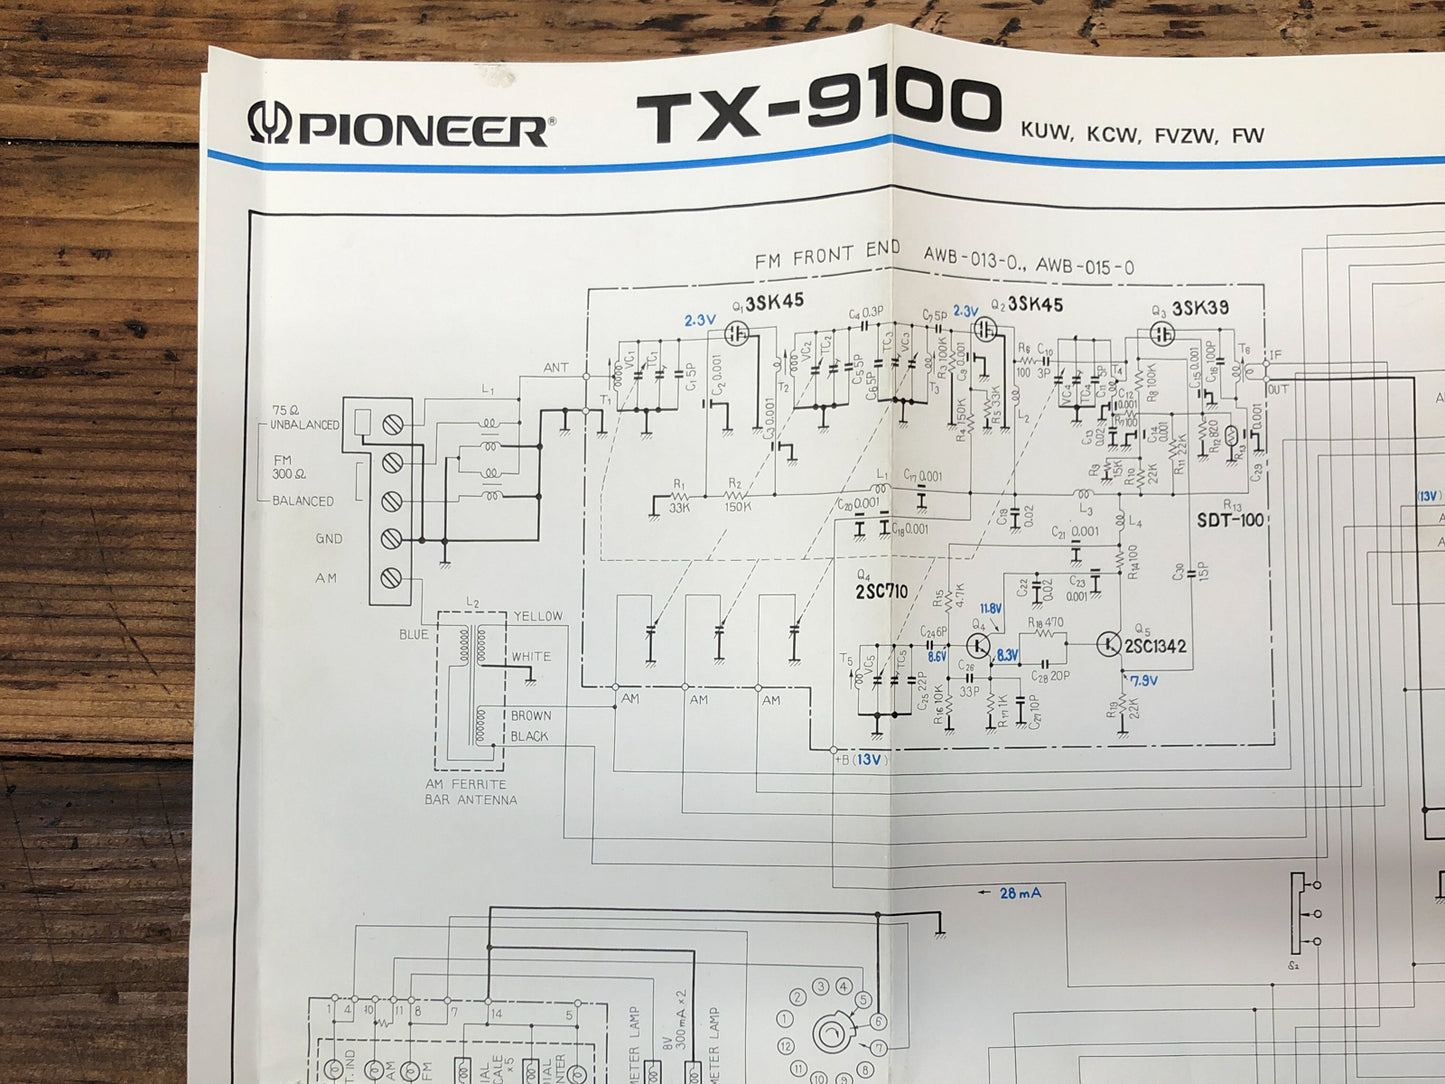 Pioneer TX-9100 Tuner Foldout Service Manual *Original*